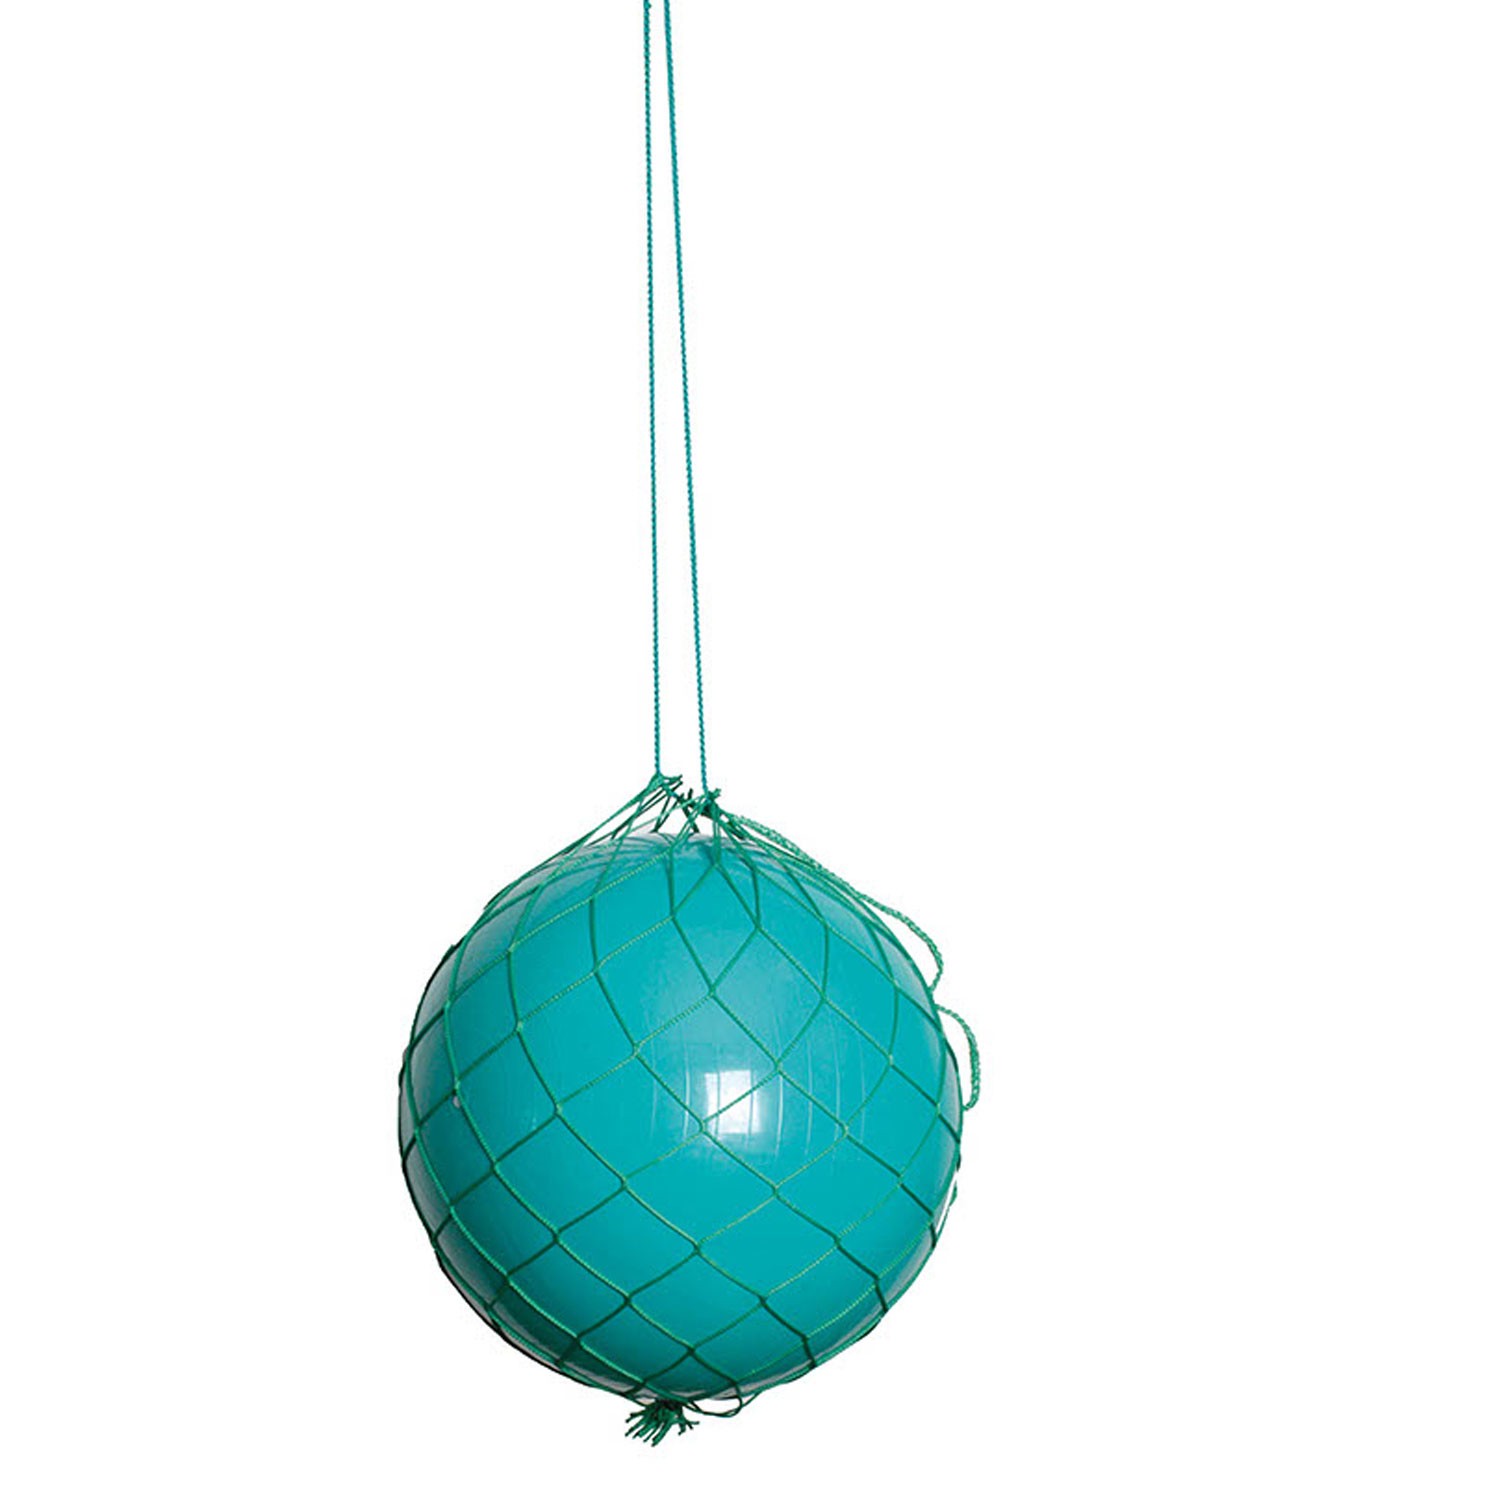 Ballnetz für 1 Bälle m. 65cm Ø